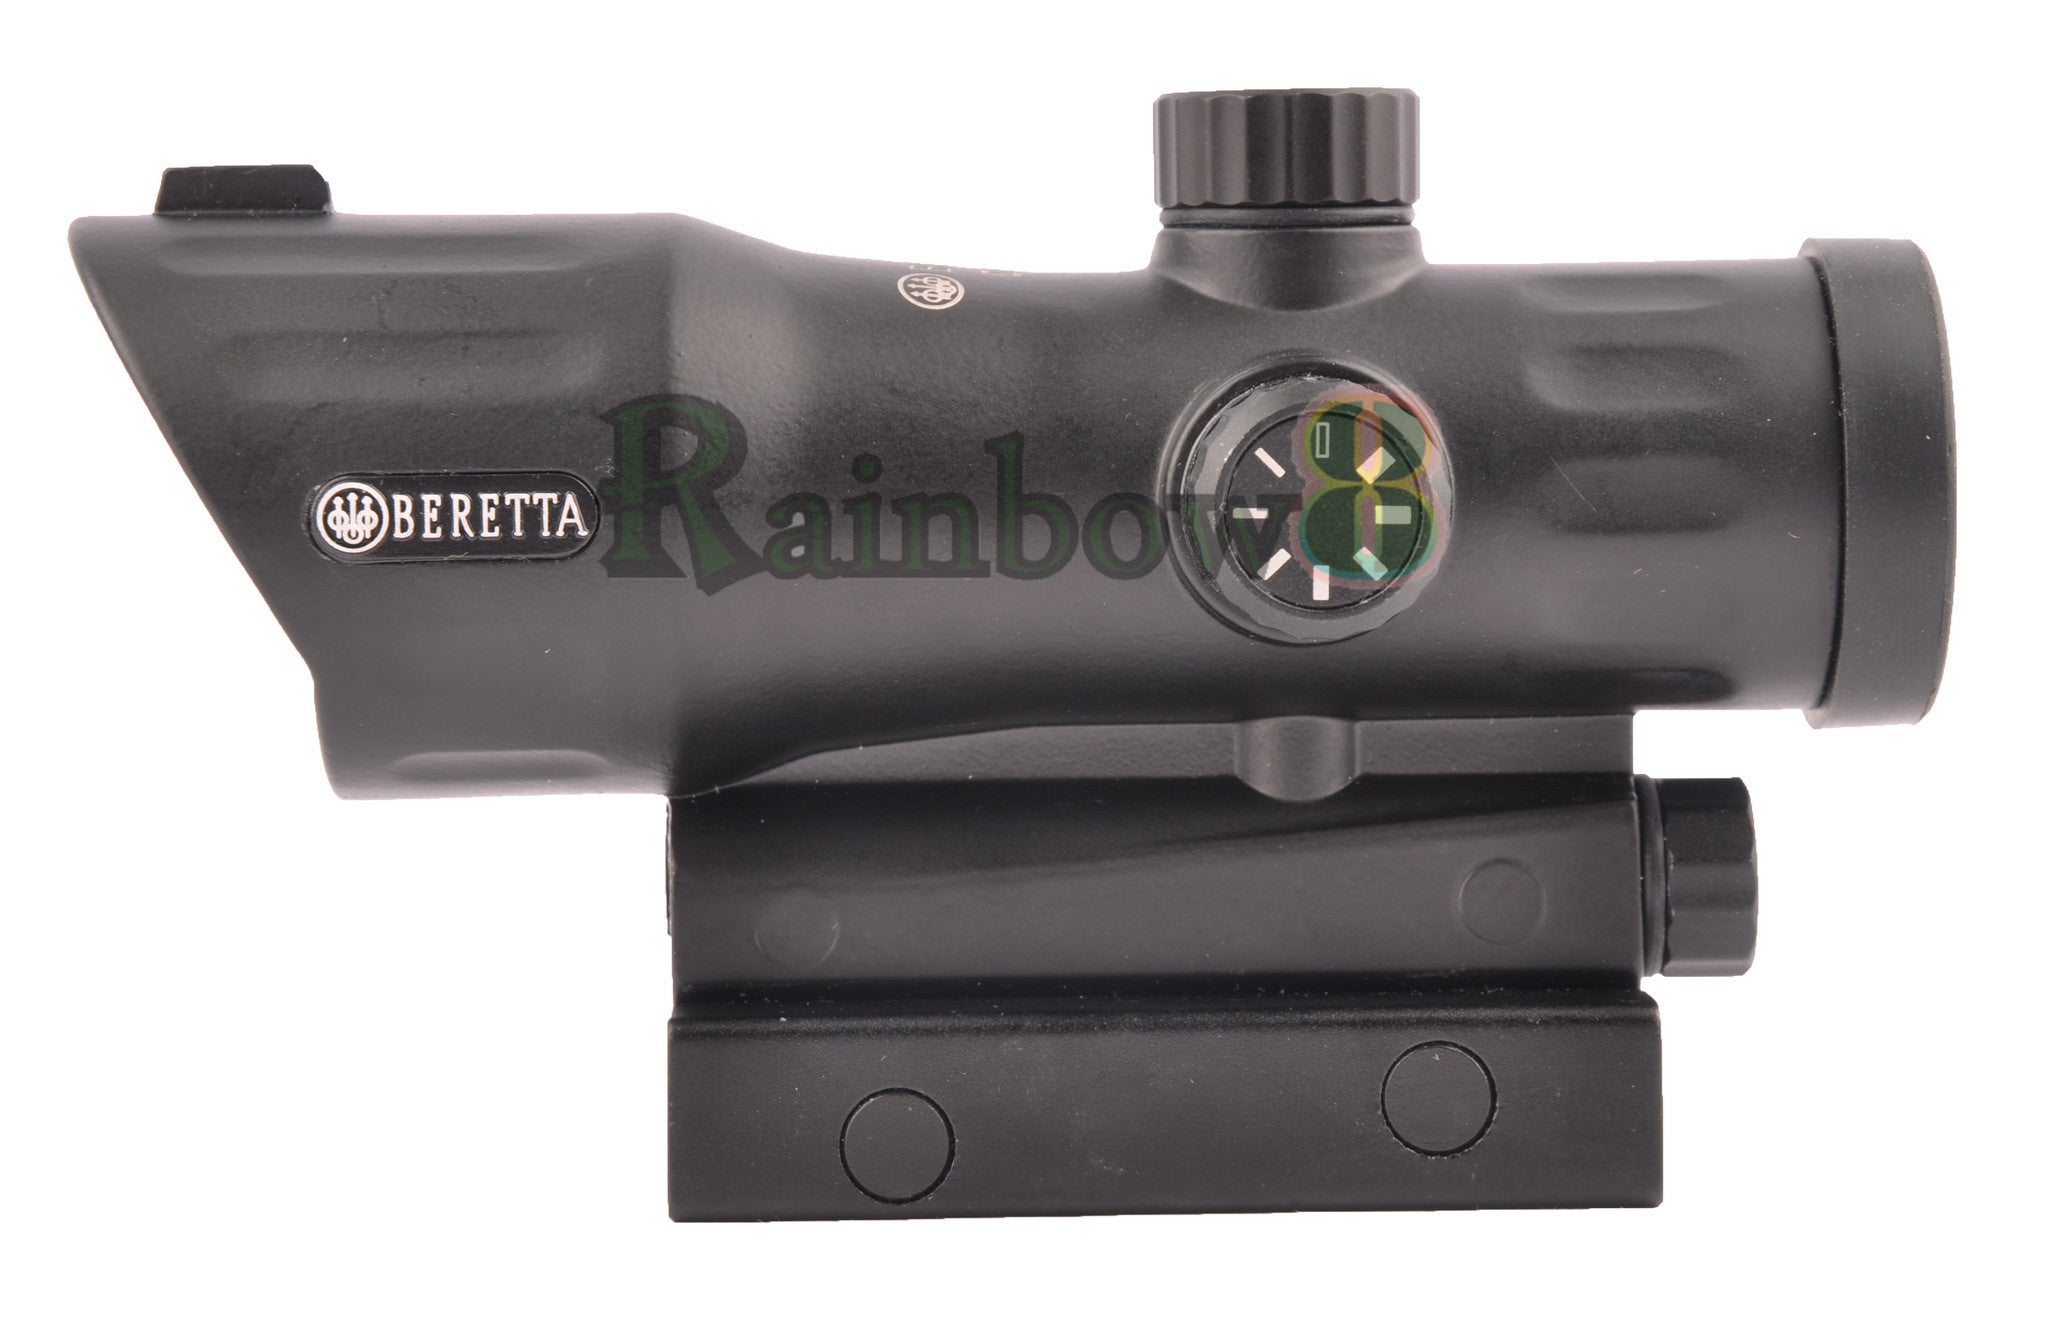 Beretta DS160 Electronic Dot Sight